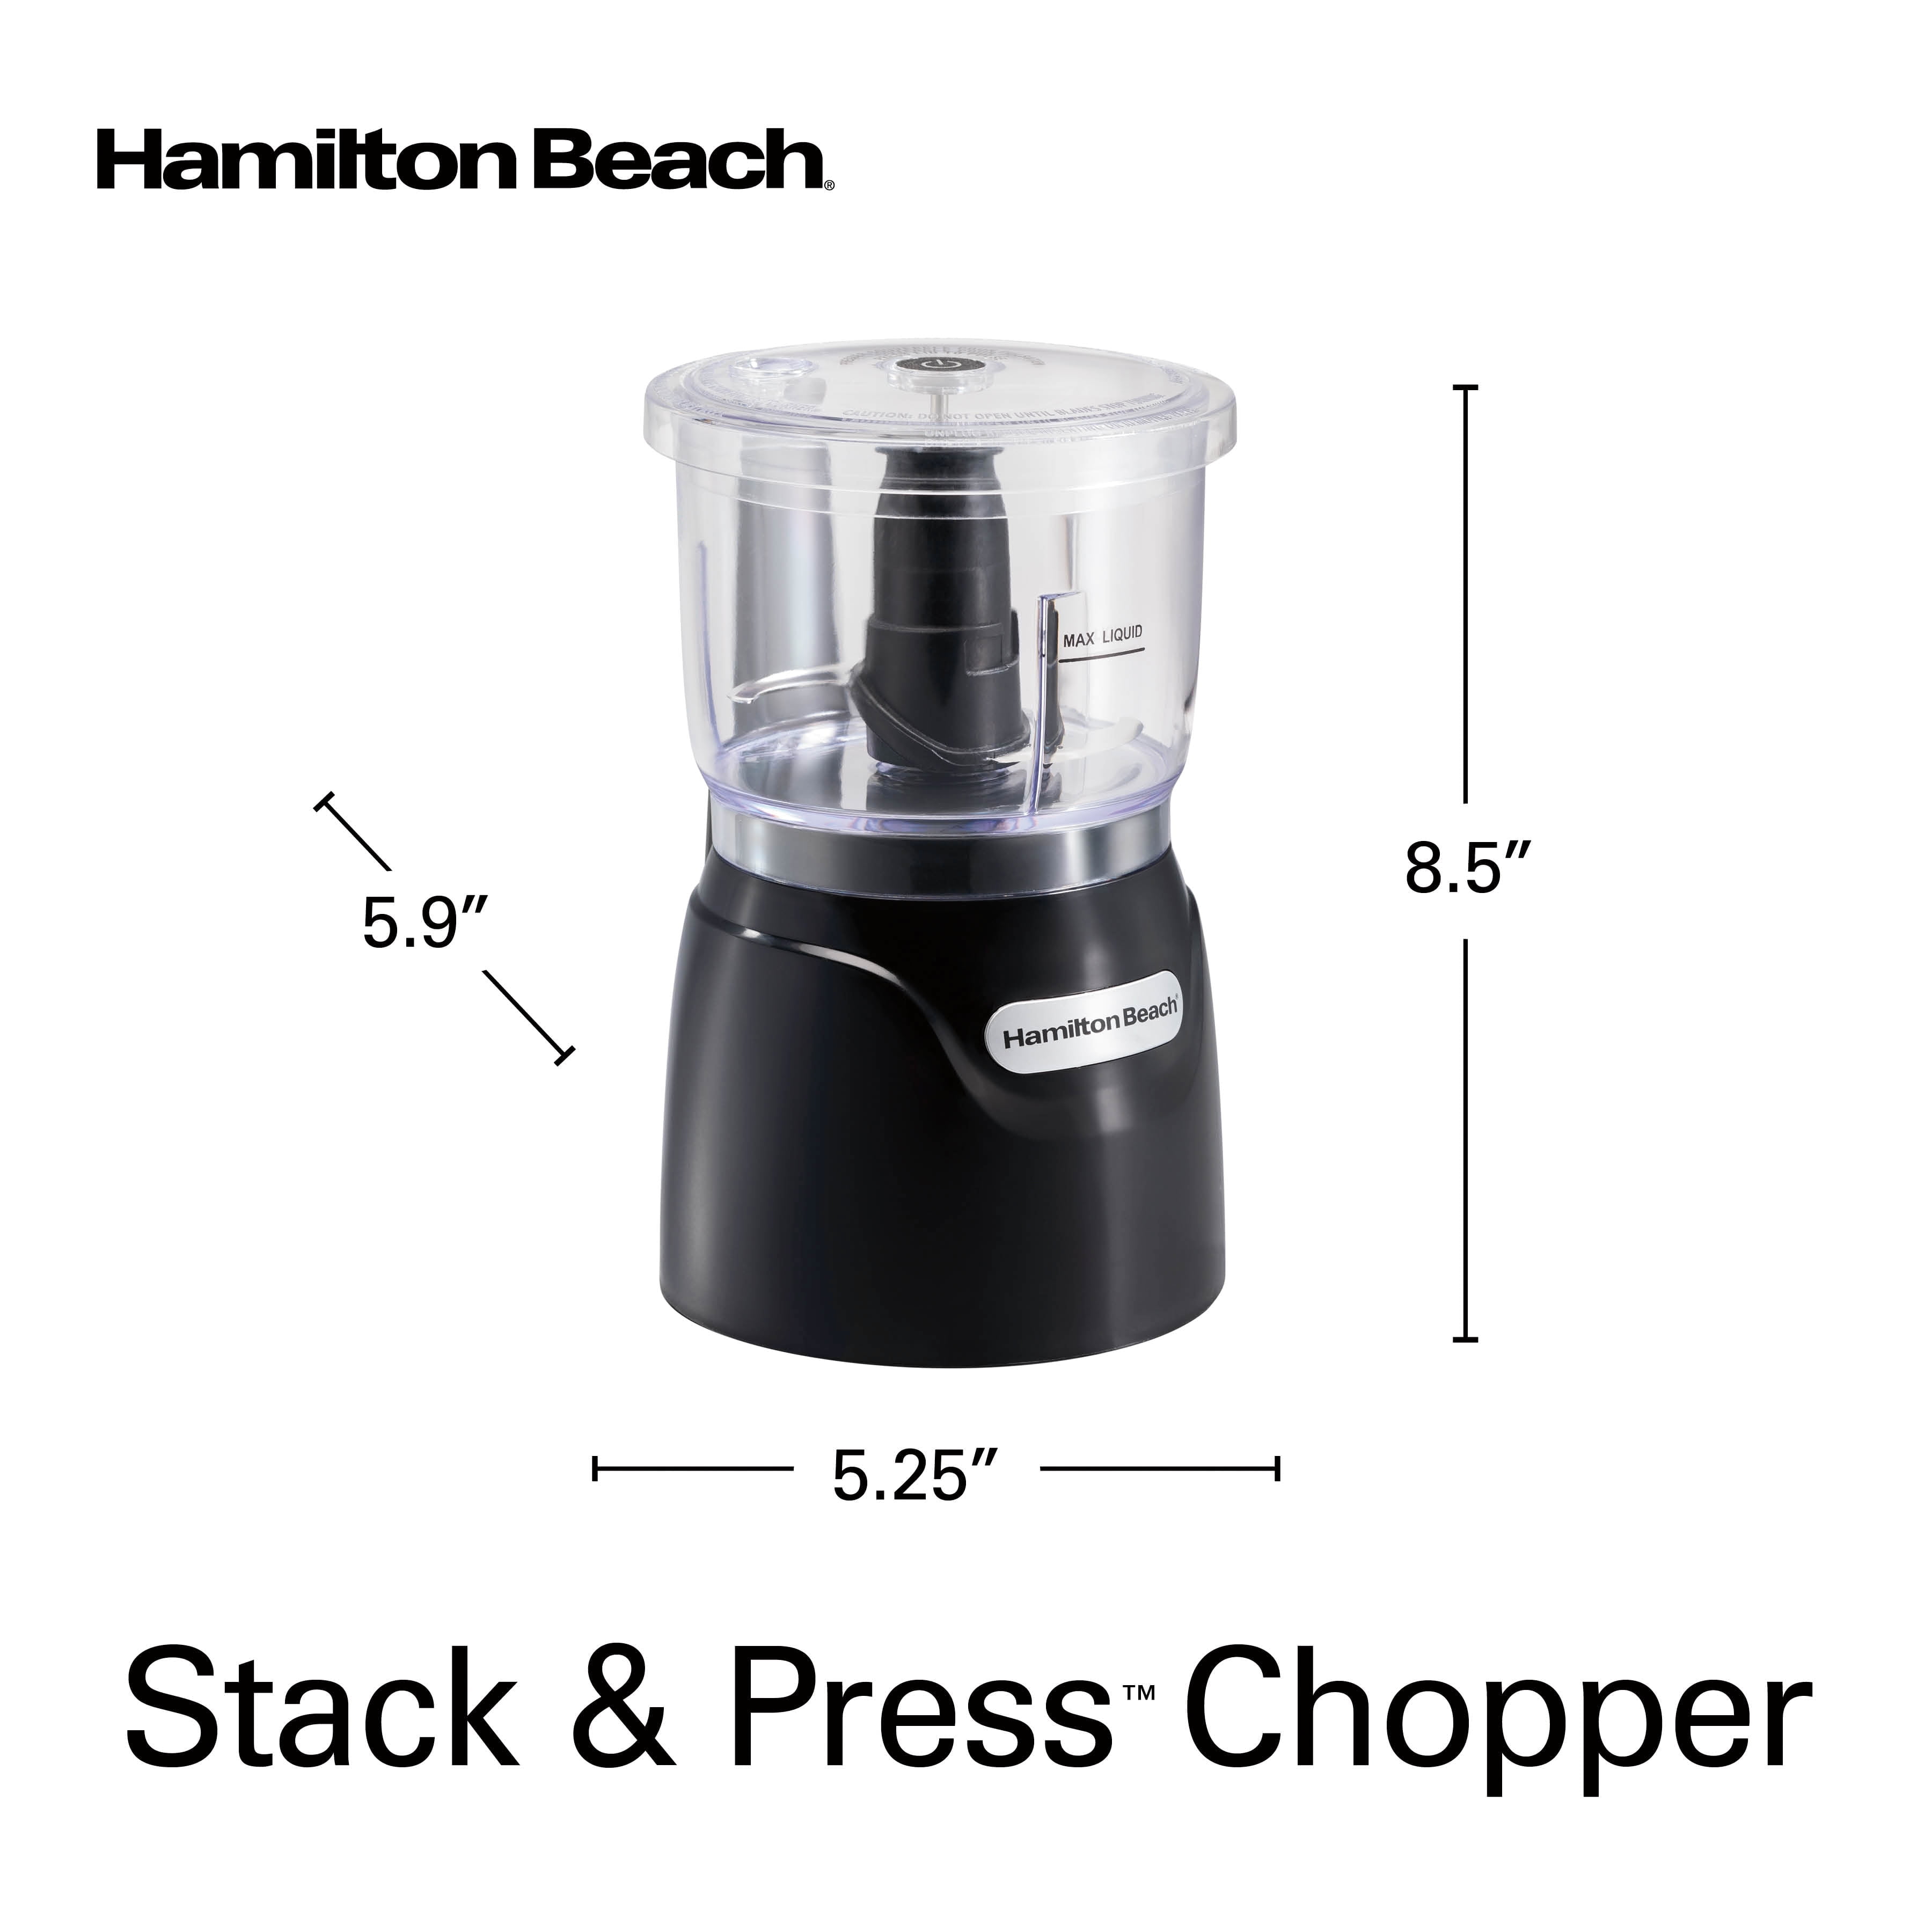 Hamilton Beach Food Processor & Vegetable Chopper for Slicing, Shredding,  Mincing, and Puree, 8 Cup, Black